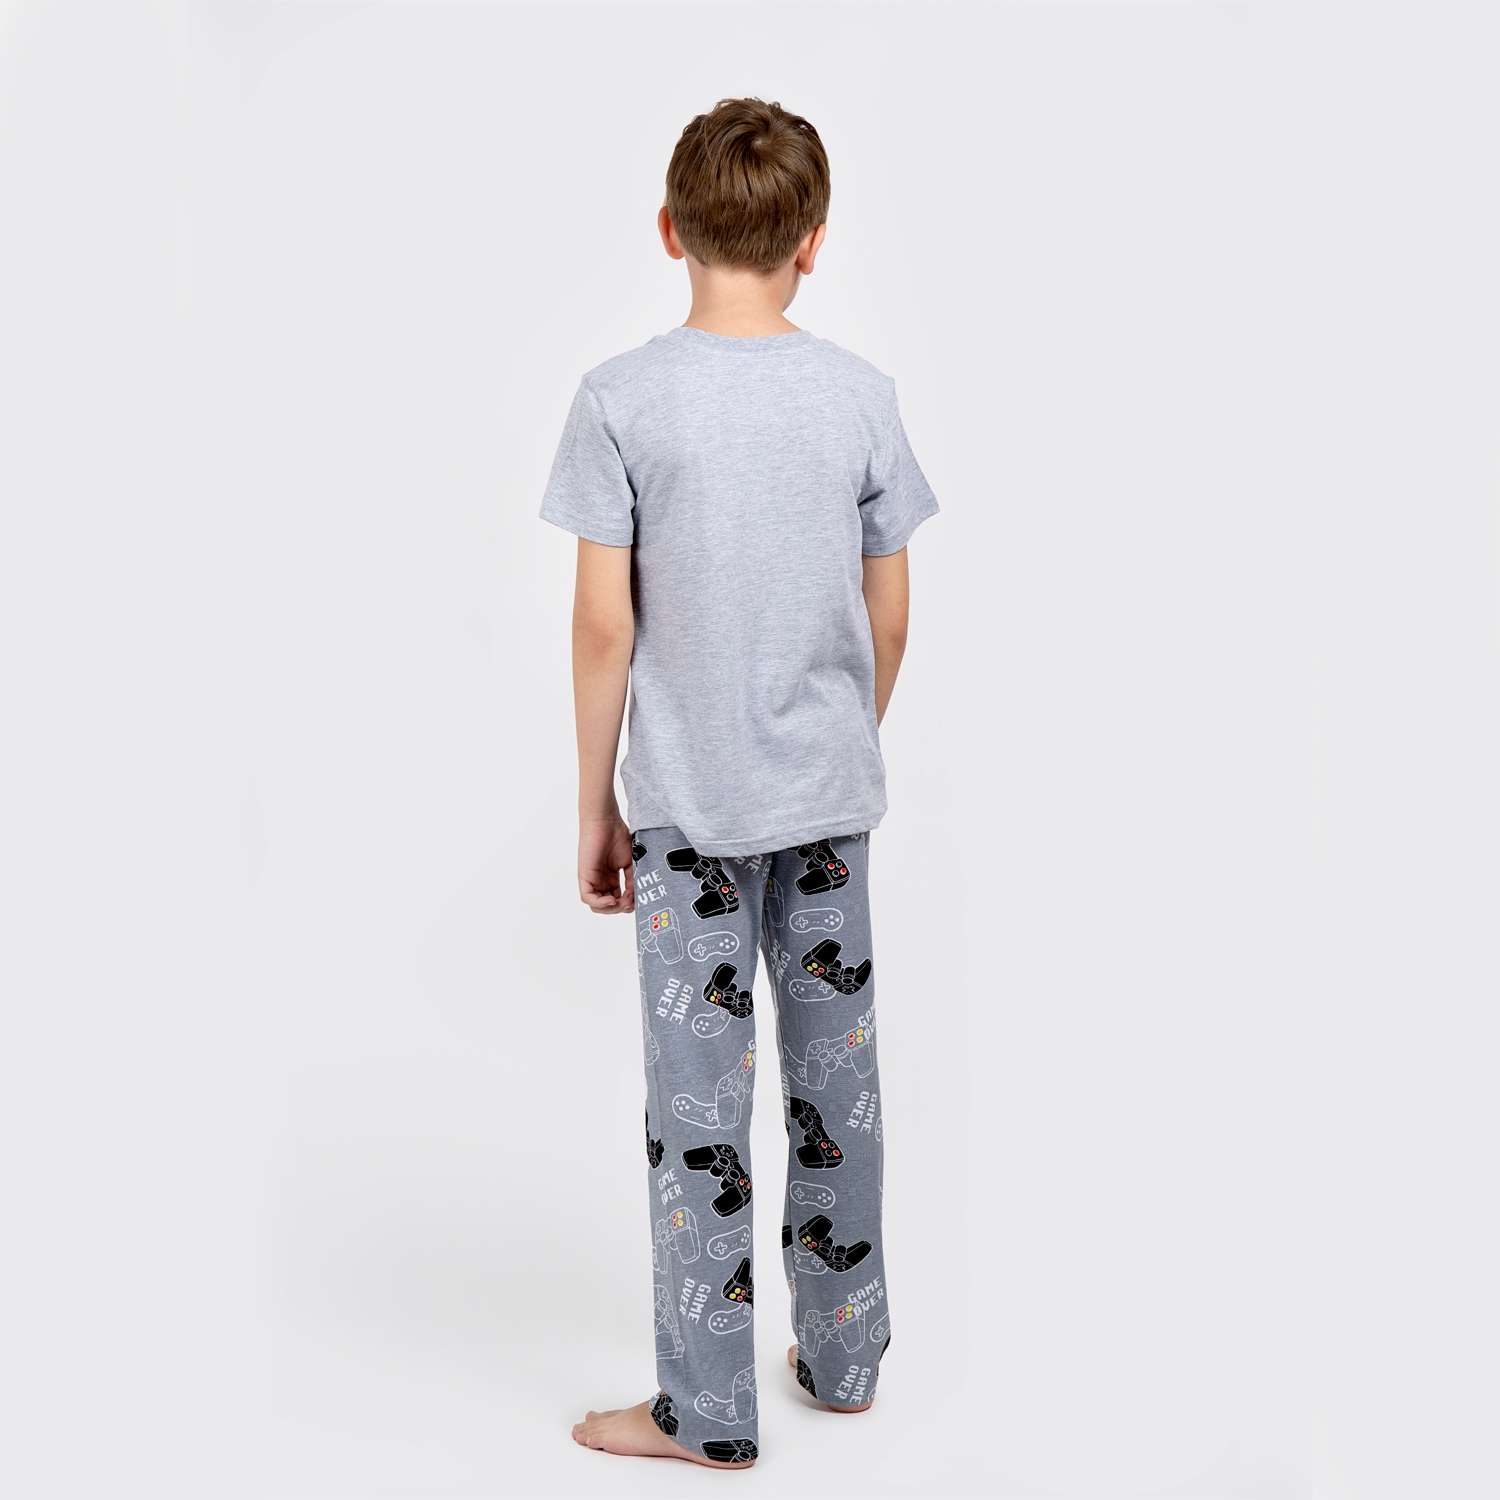 Пижама MOR TS9-4-7181/серый-меланж-серо-черный - фото 3